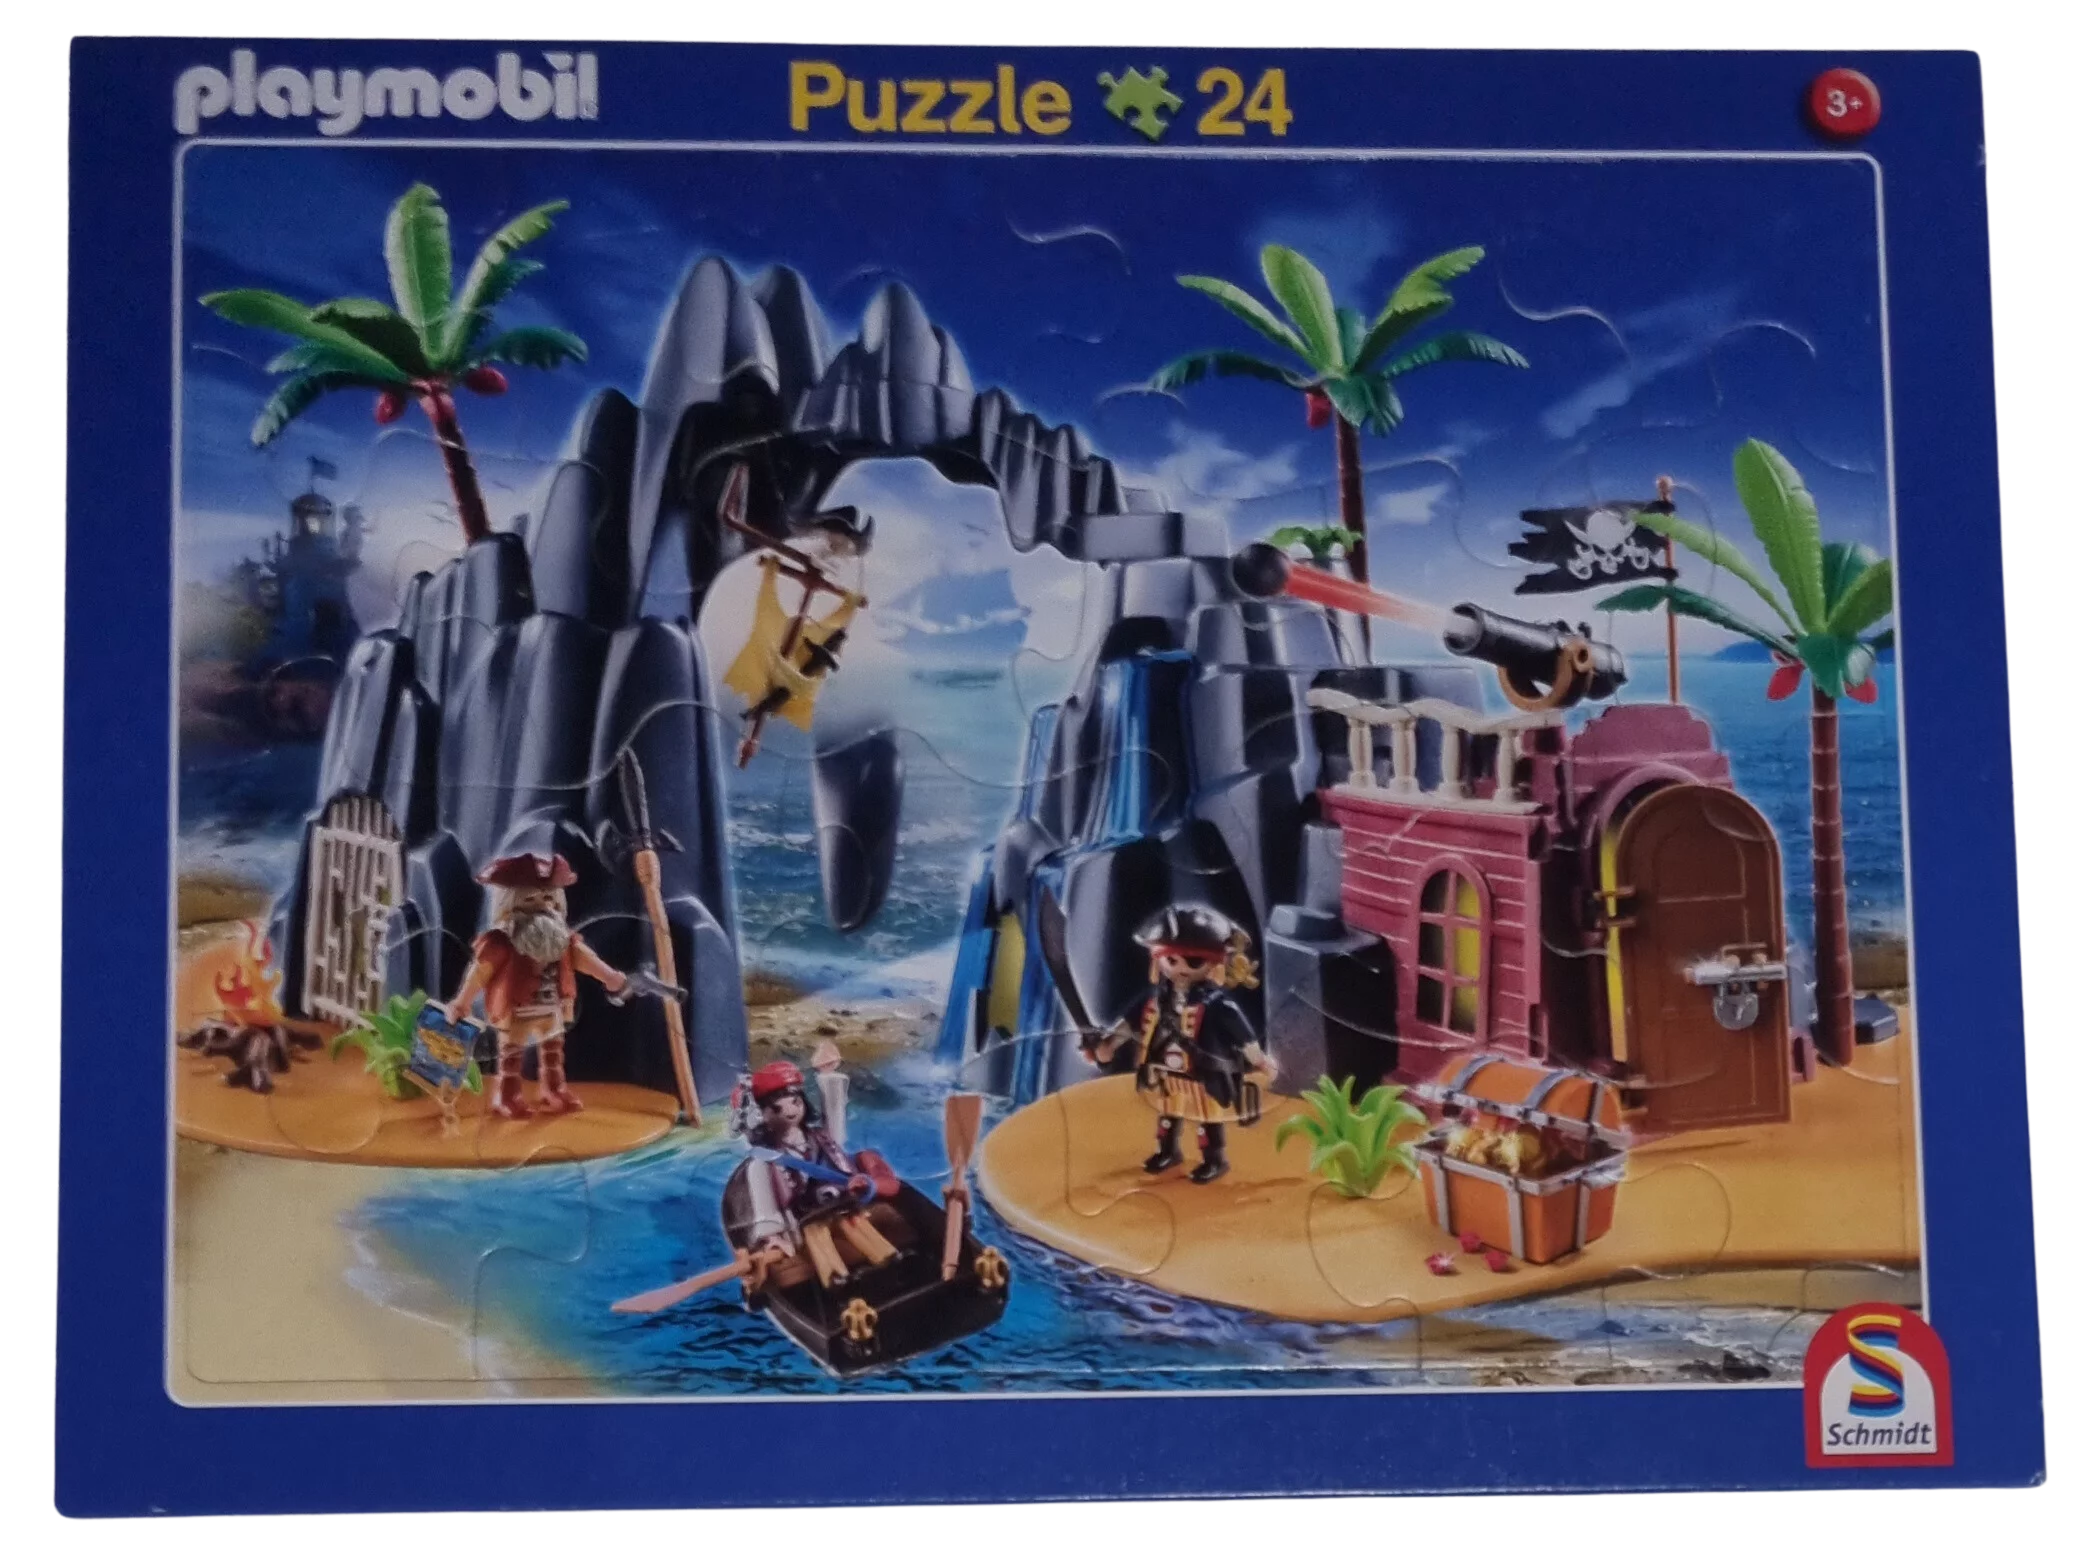 Schmidt Playmobil 24 Teile 56796